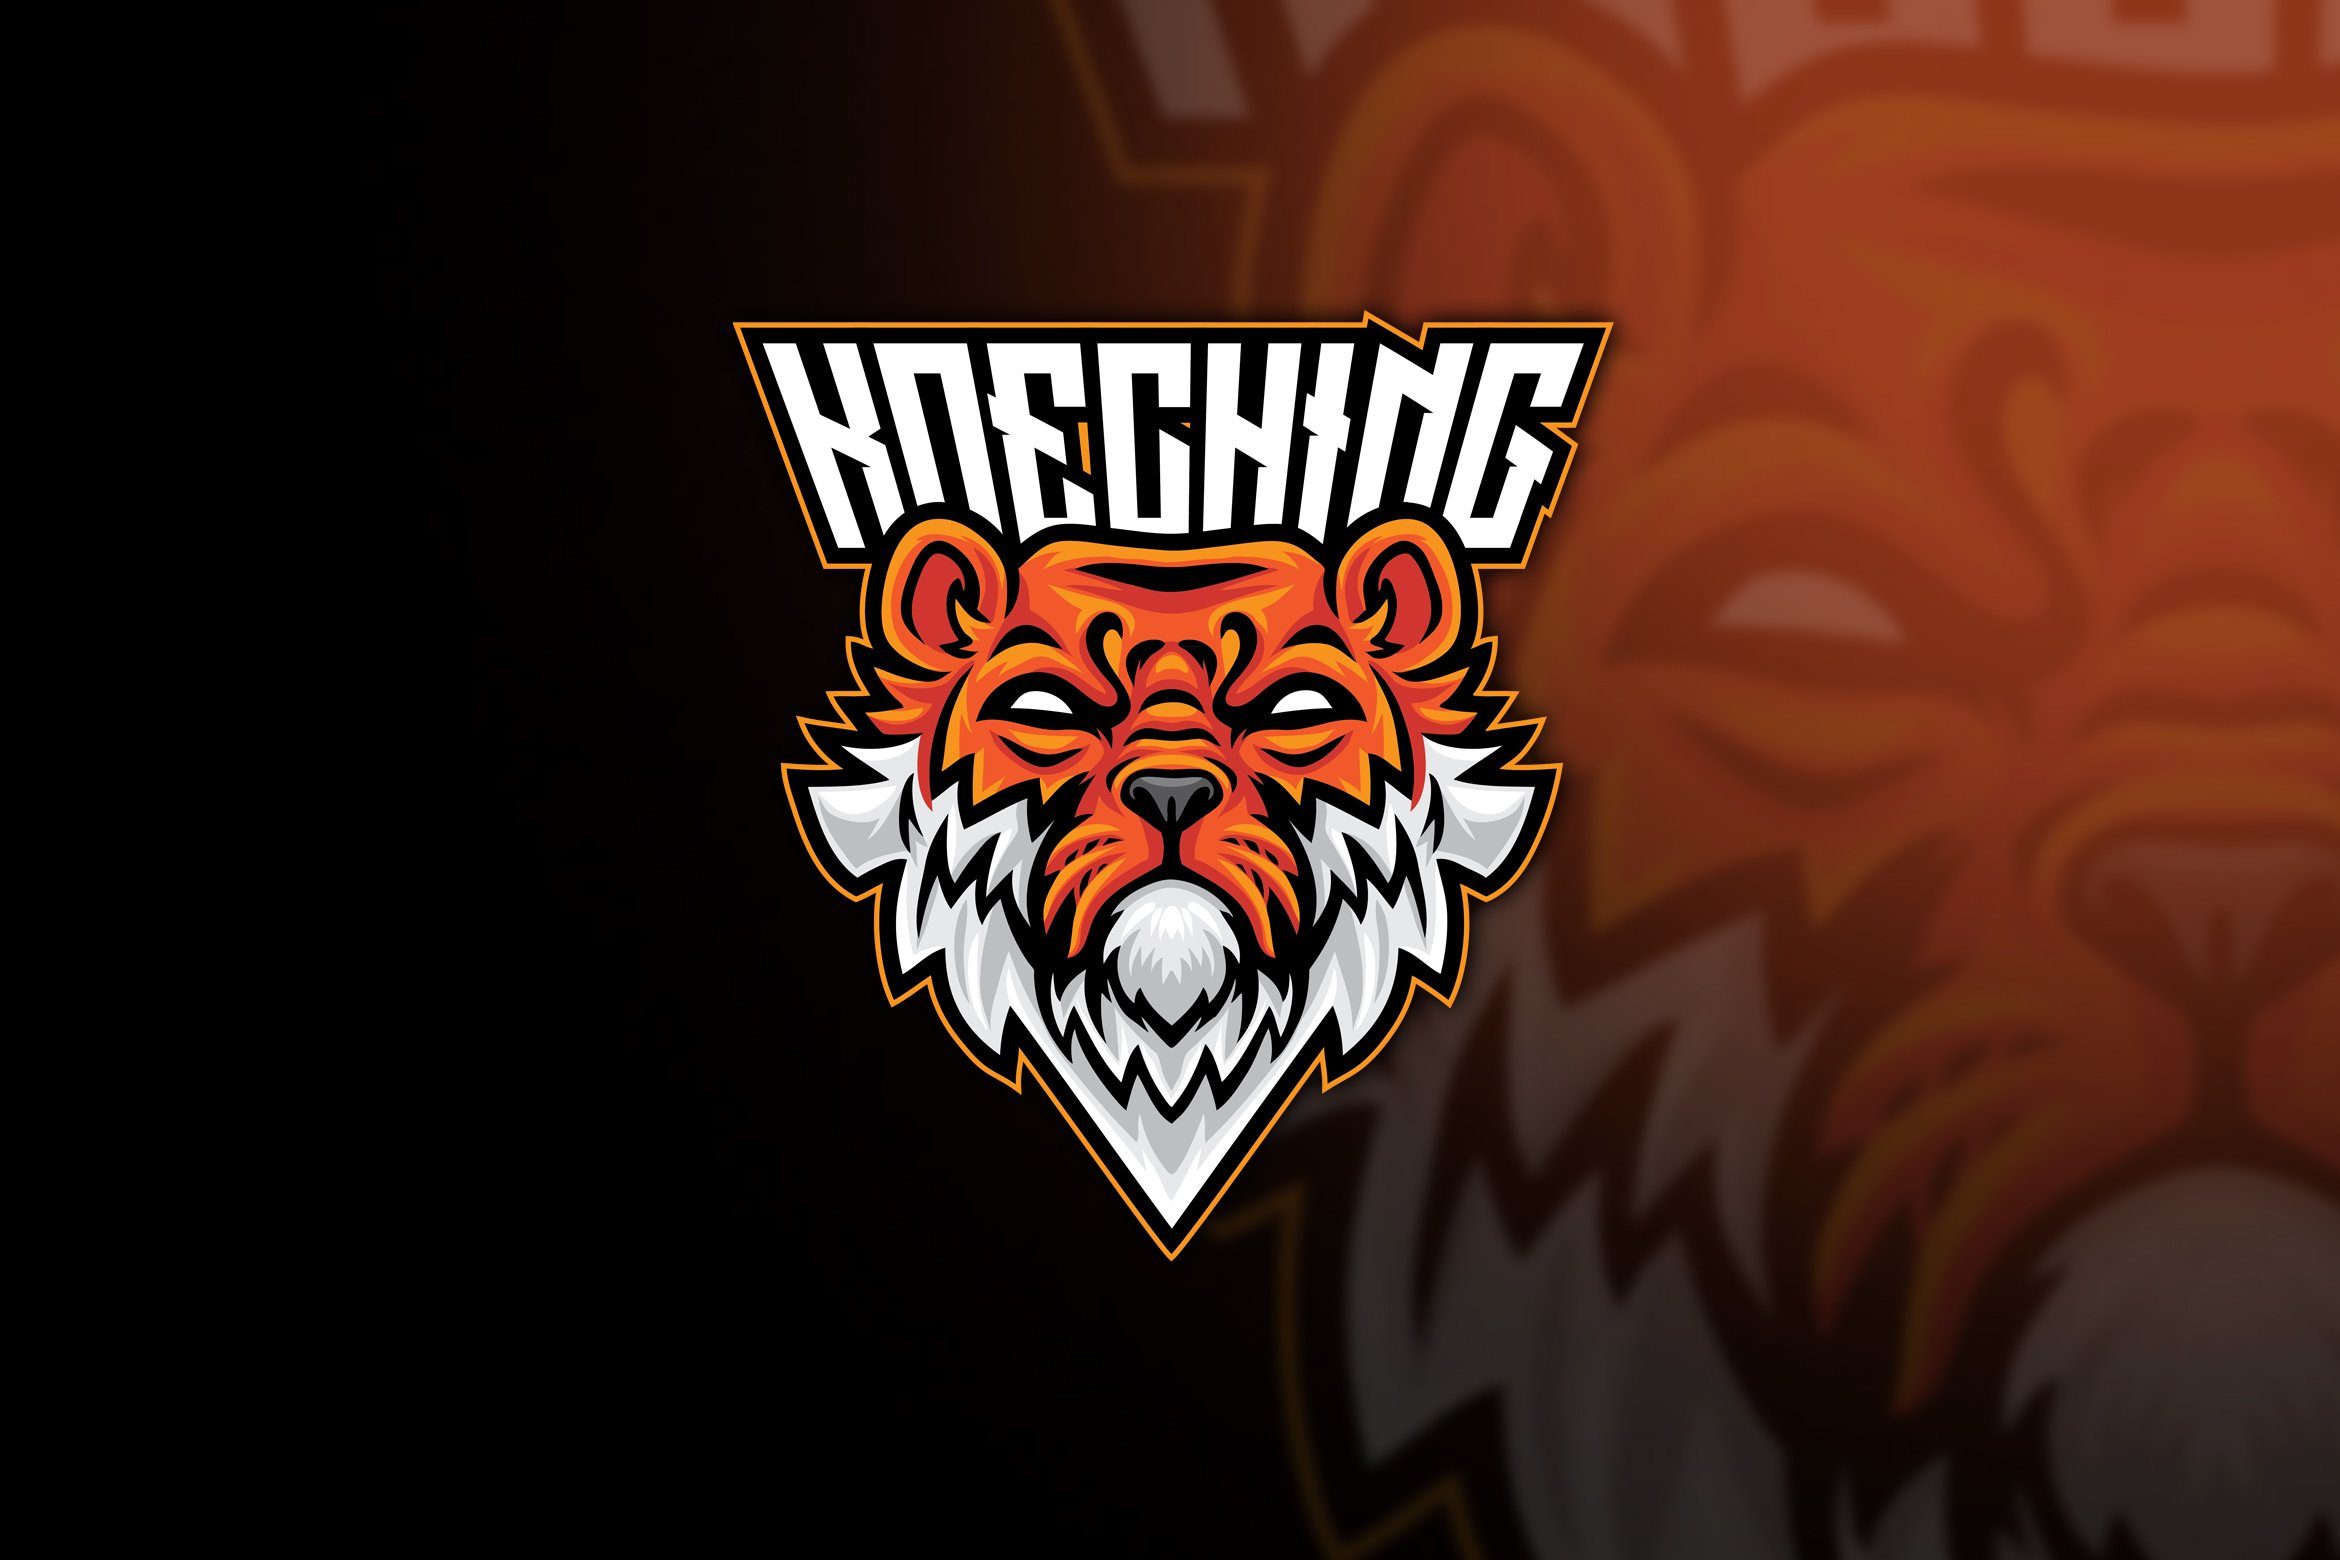 Tiger Koeching Esport Logo cover image.